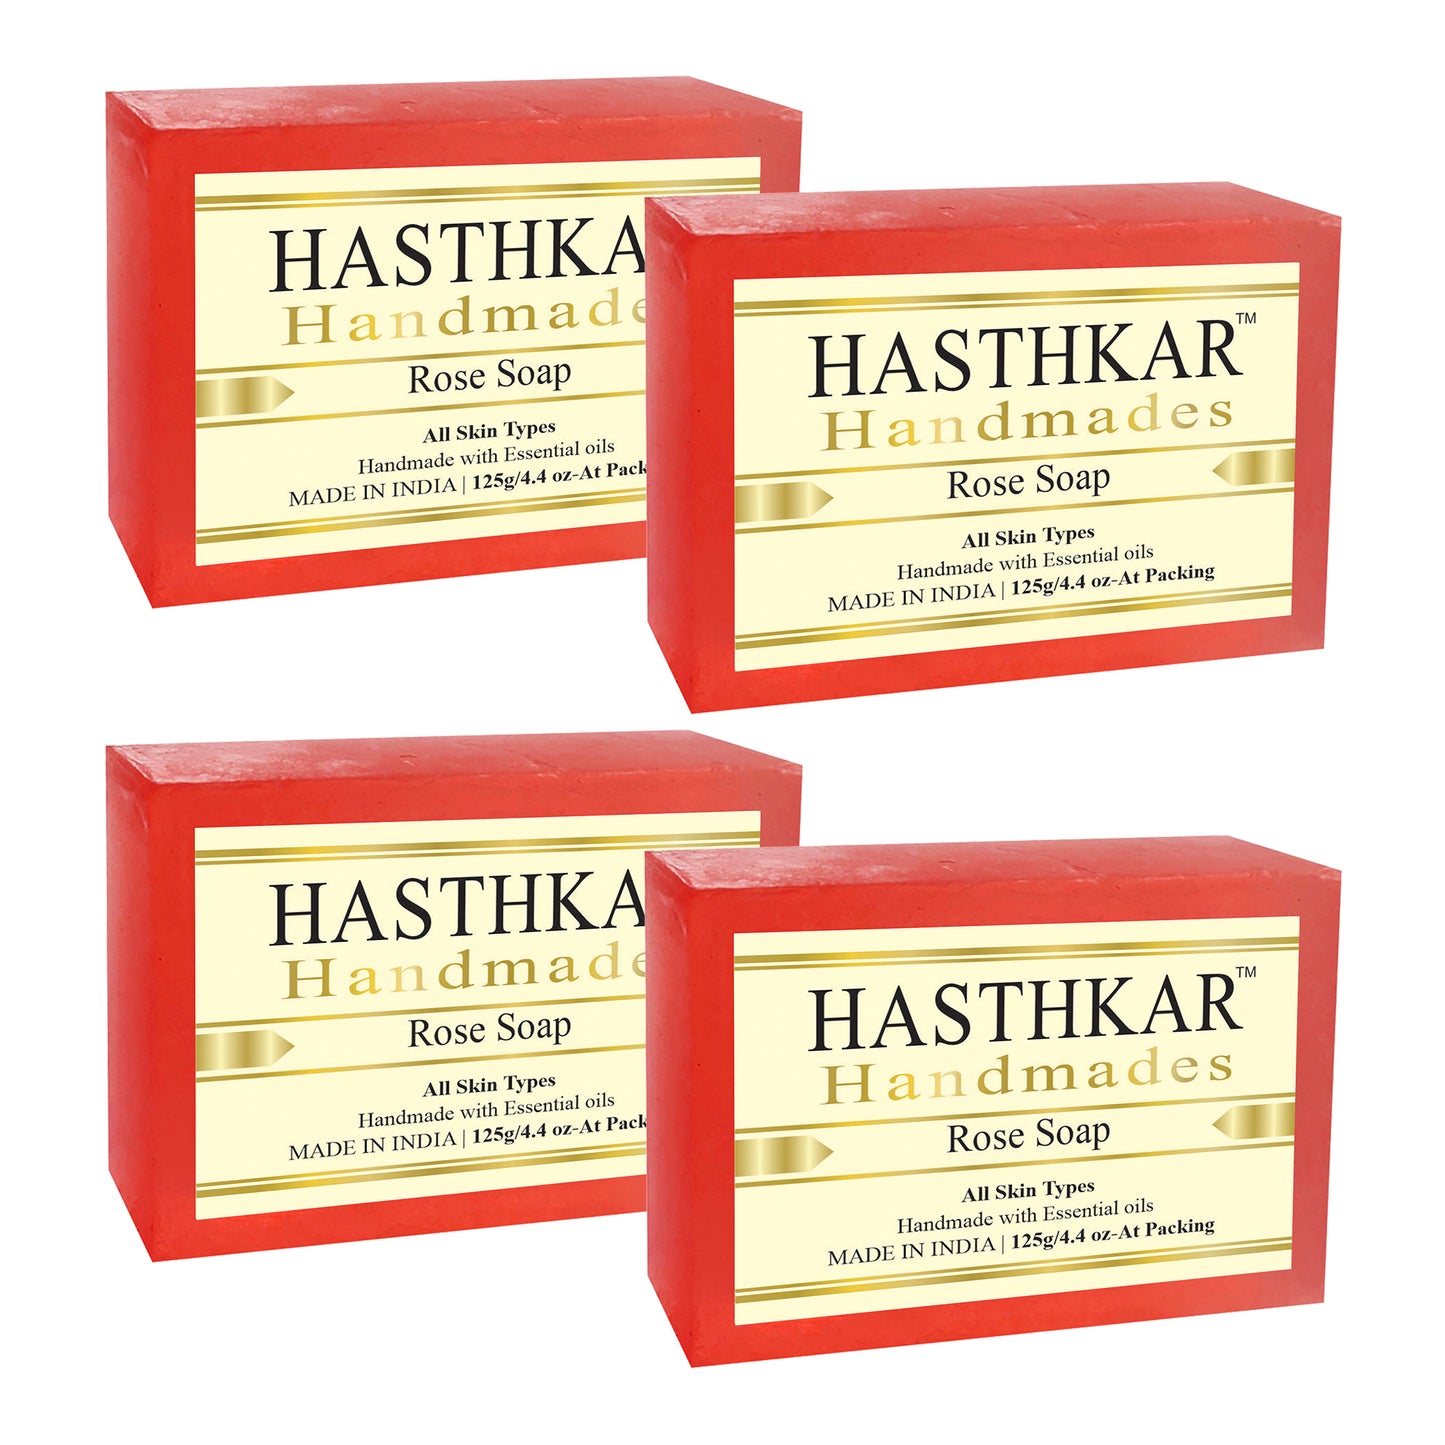 Hasthkar handmades rose bath soap men and women pack of 4